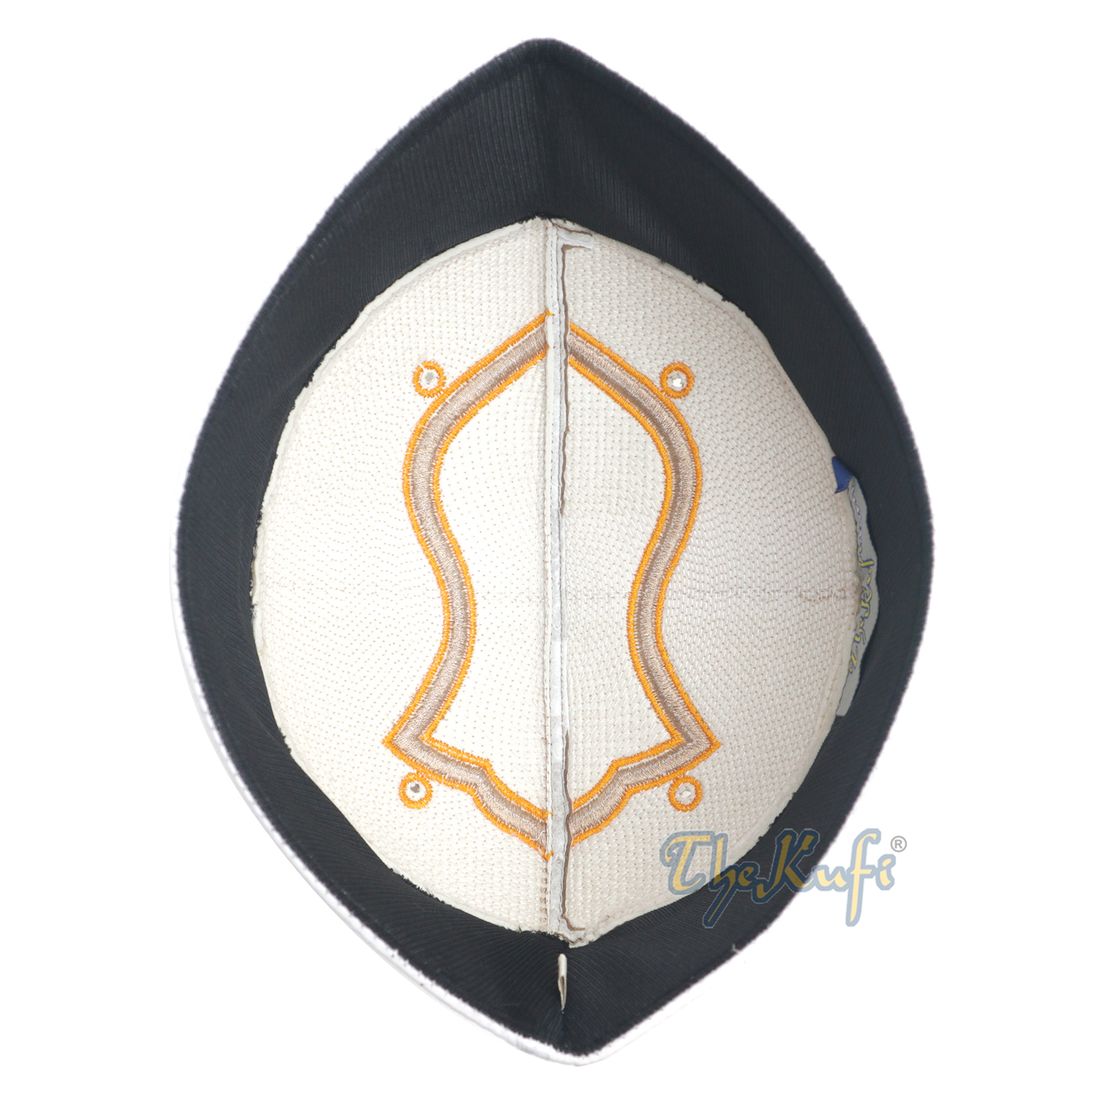 Nalain Sandal Kufi Crown Rigid Light Brown White Golden Embroidery Muslim Hat